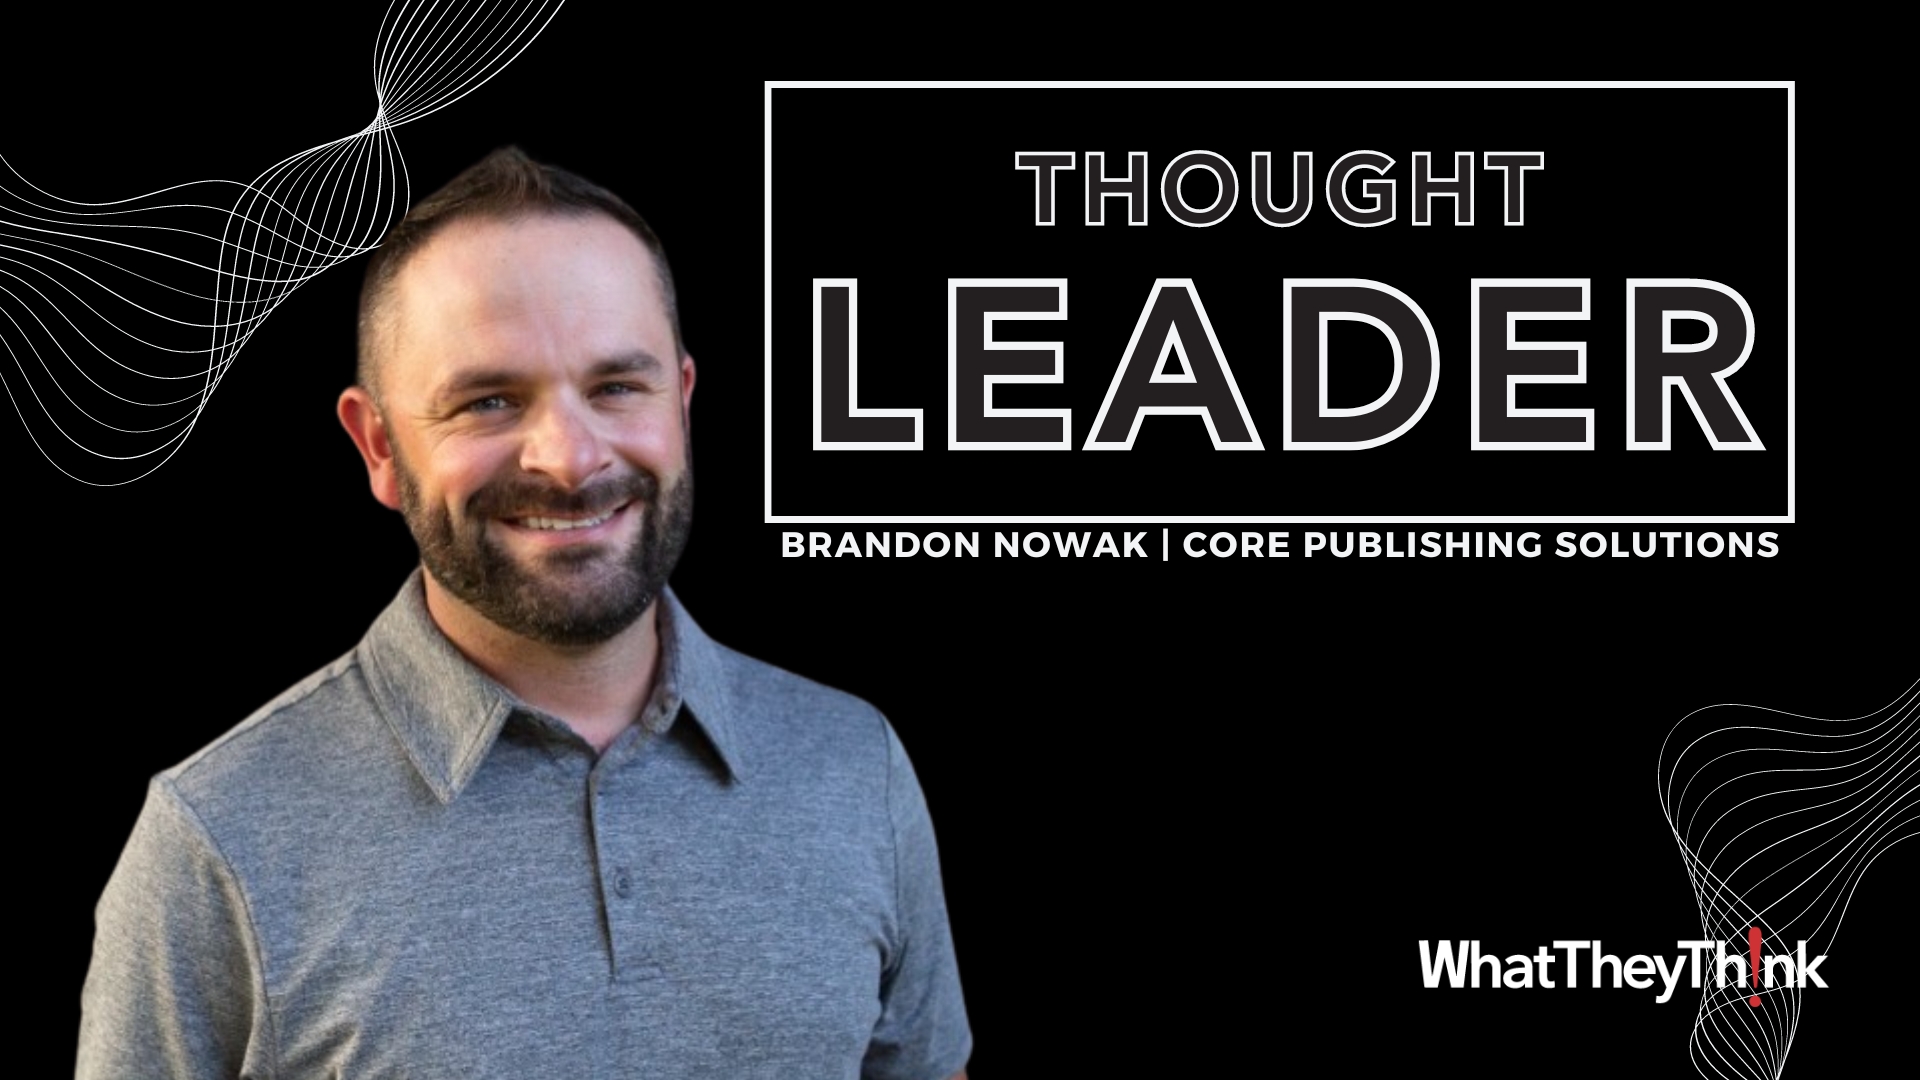 Core Publishing Solutions’ Brandon Nowak on Managing Massive Page Volume